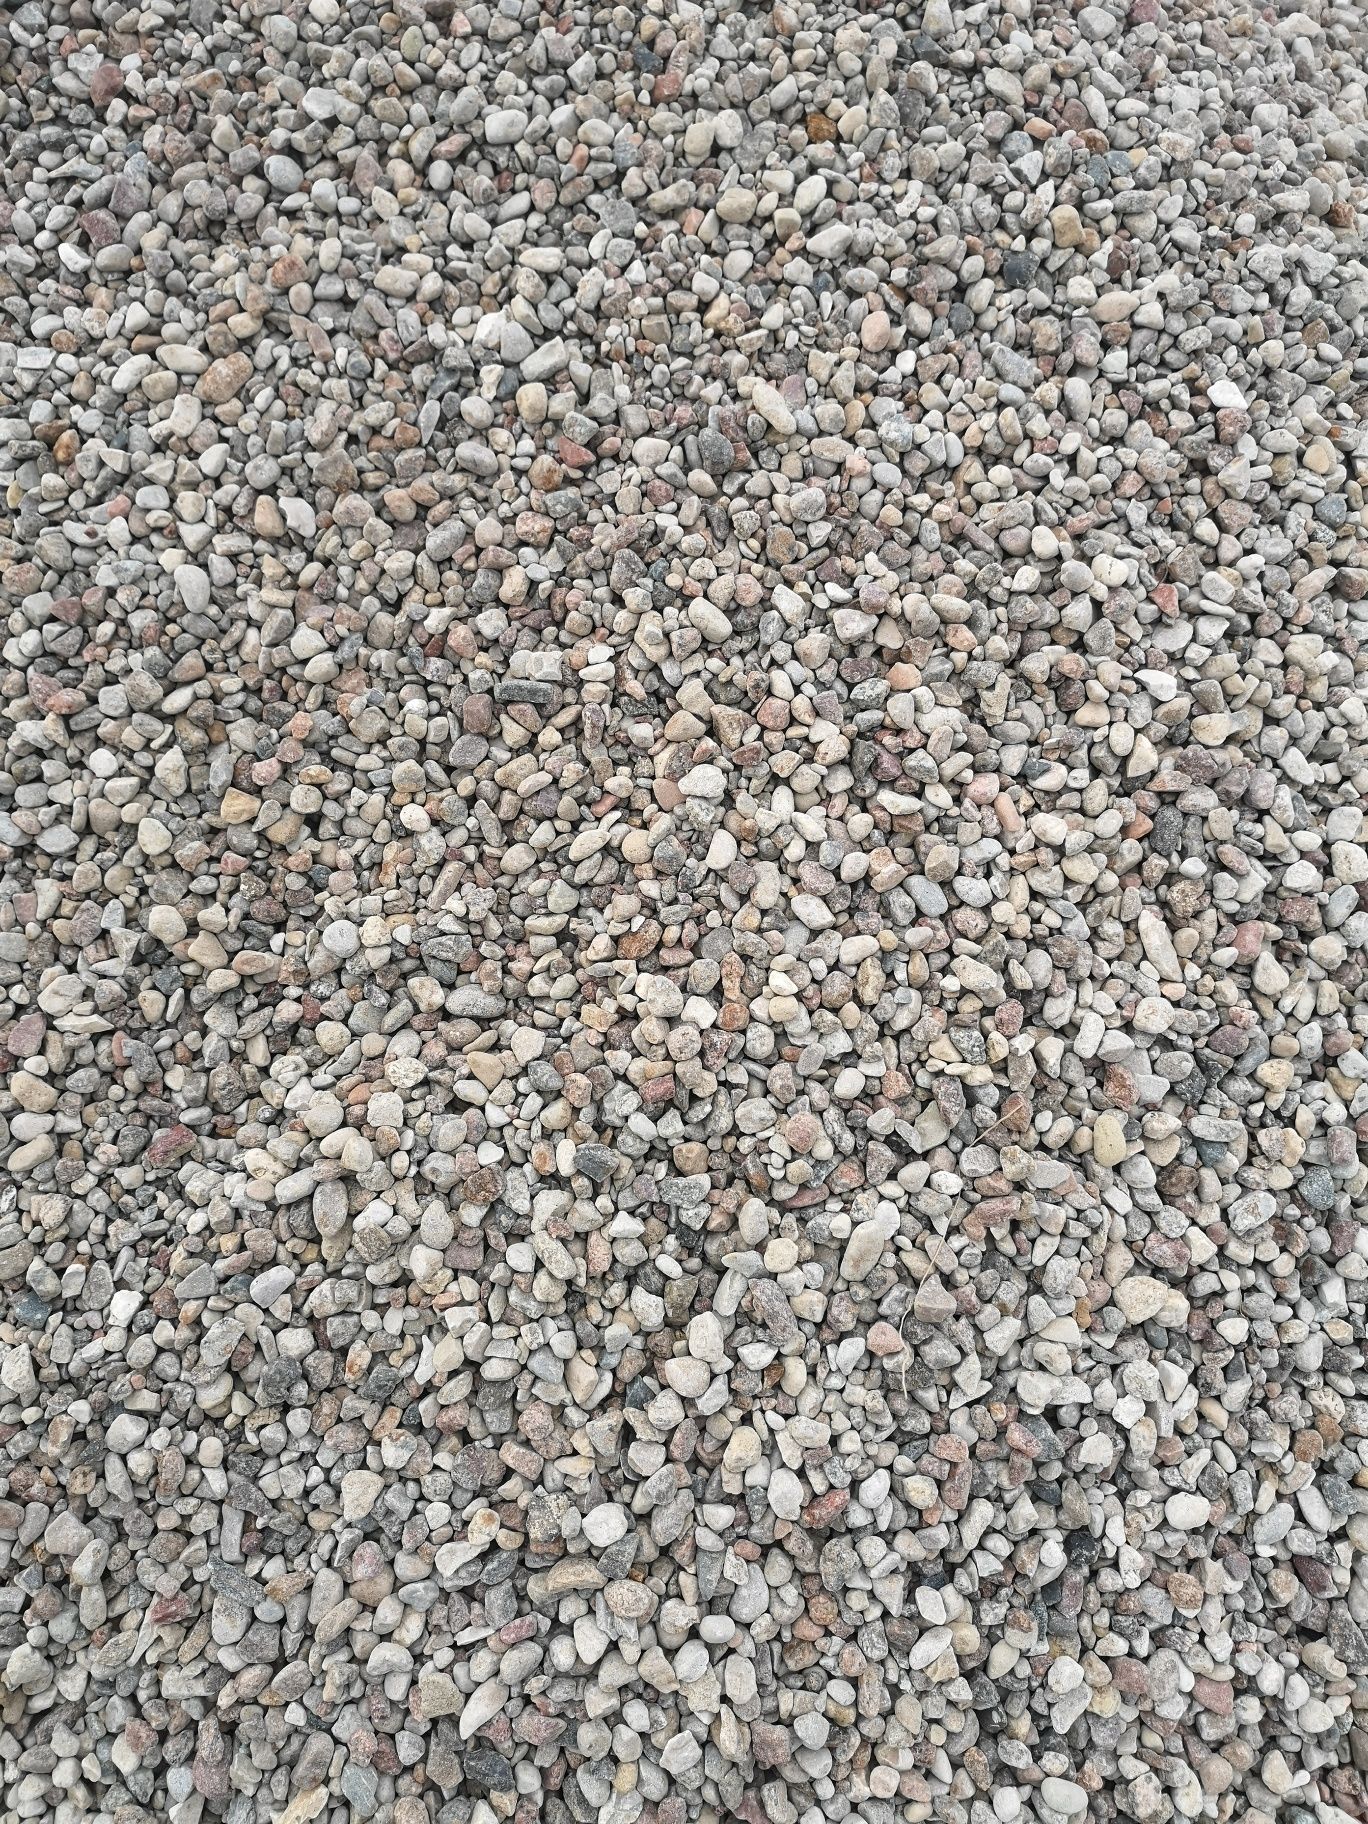 Kamień otoczak 2-8, 8-16, 16-32, piasek, żwir ziemia tłuczeń transport